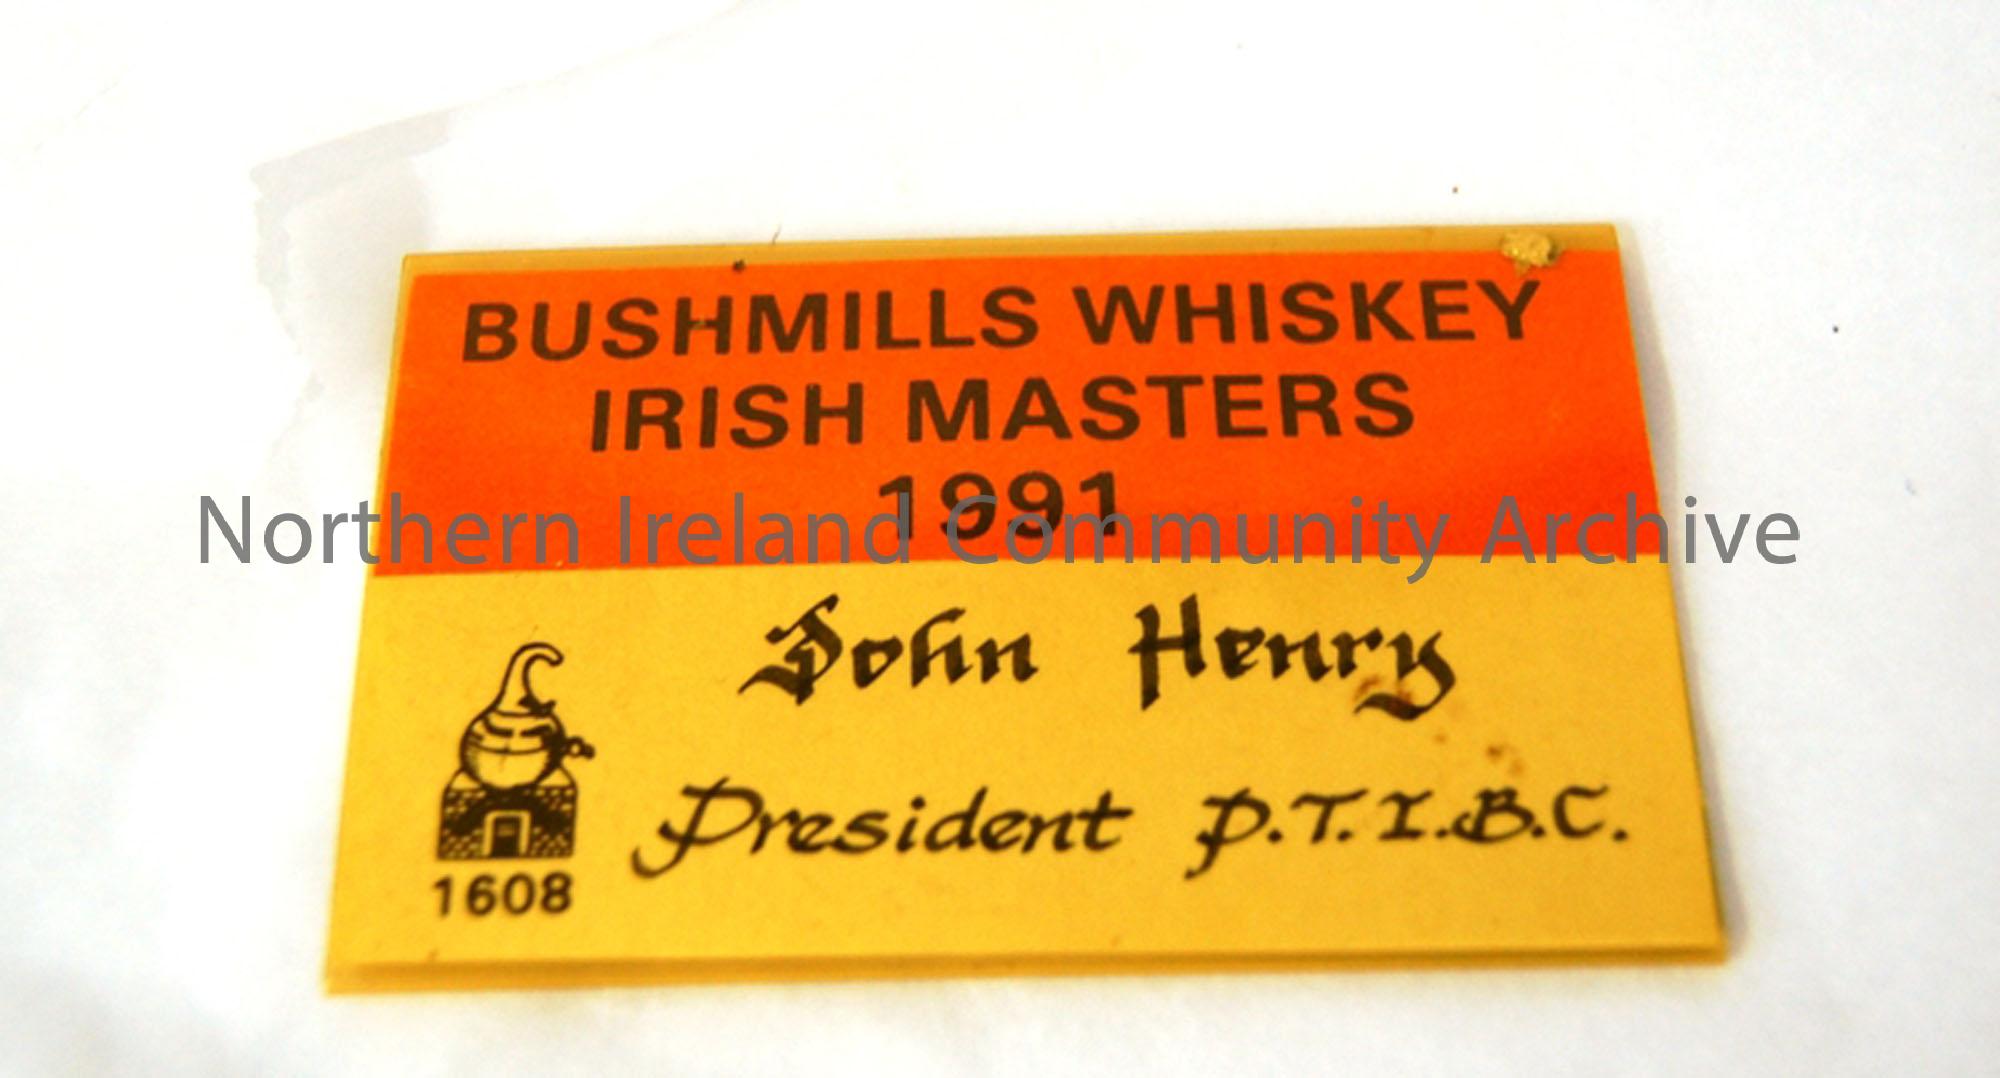 Bushmills Whiskey Irish Masters 1991, John Henry President P.T.I.B.C B name badge